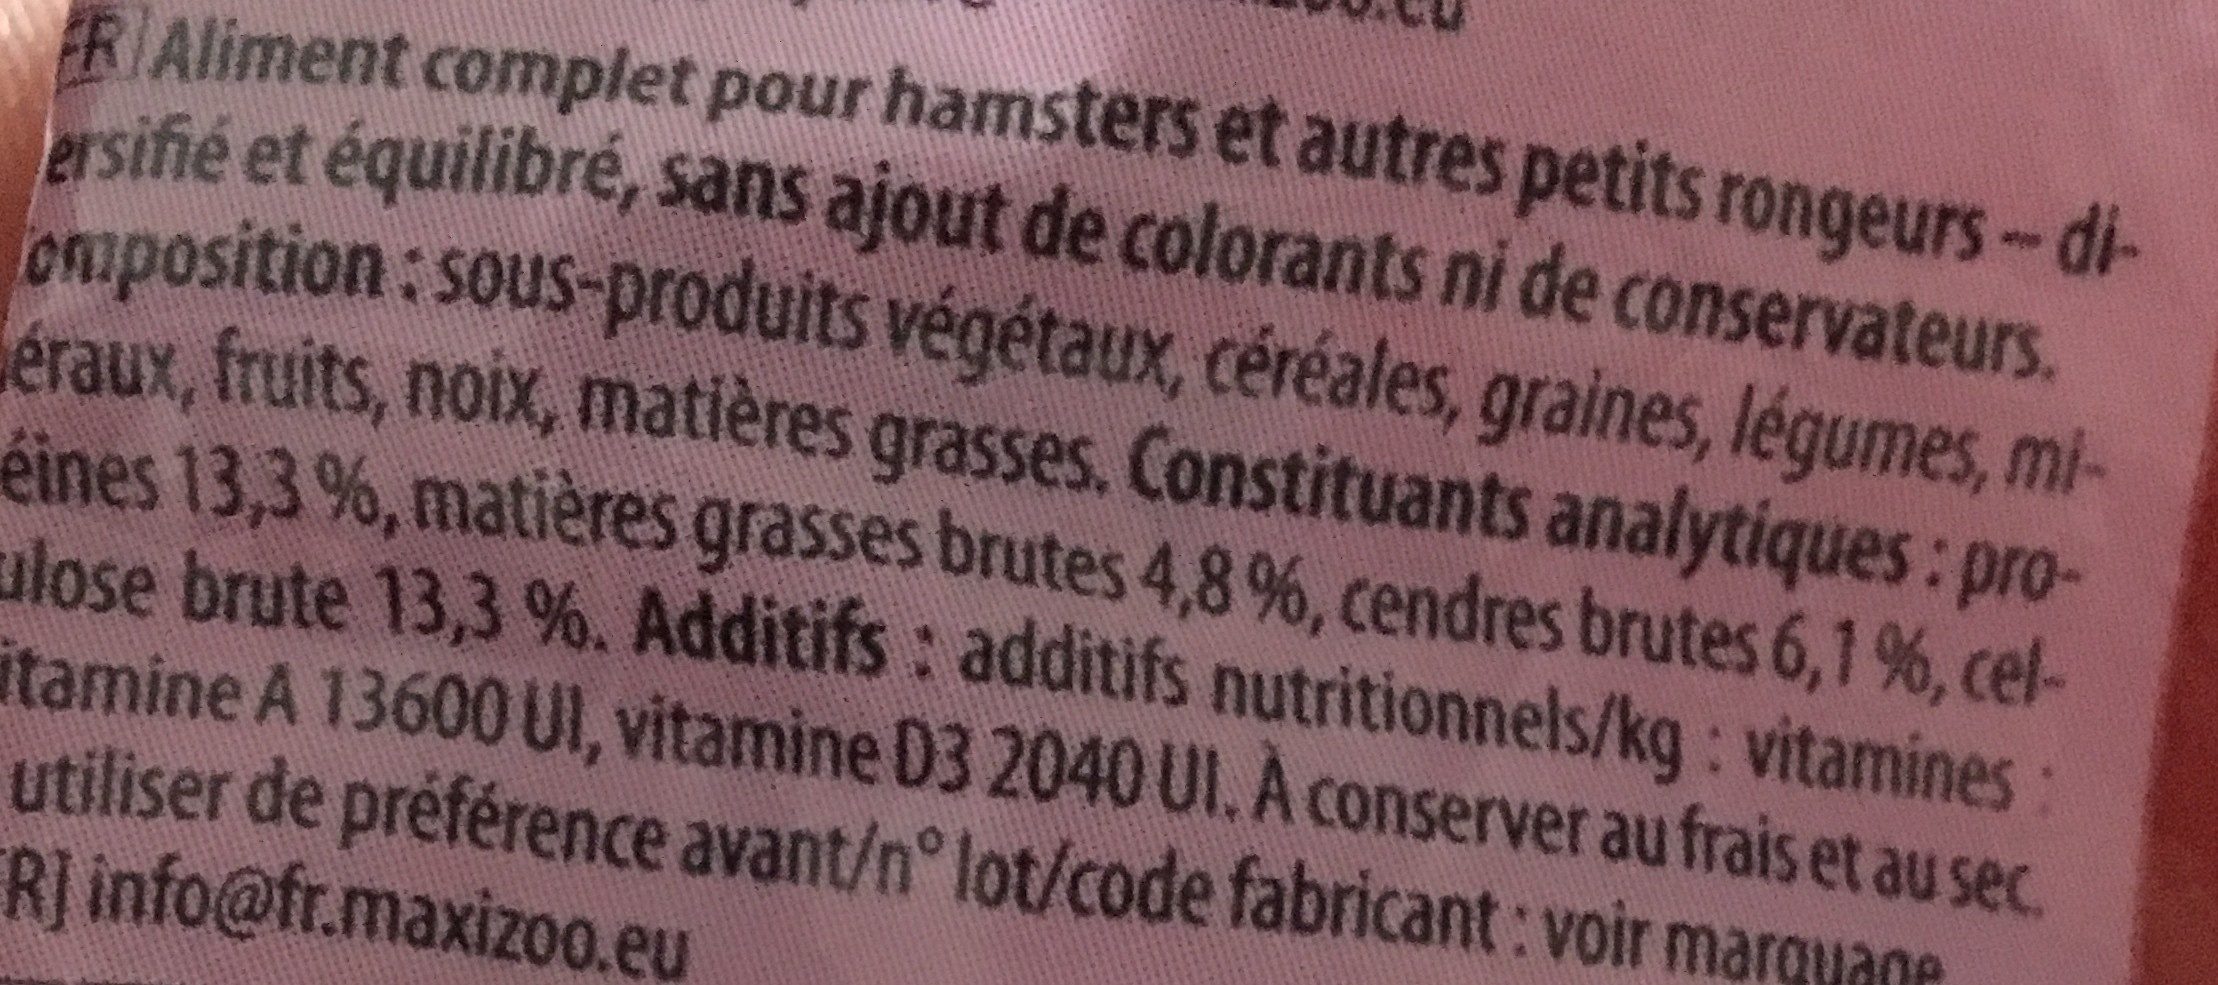 Aliment pour hamster - Ingrédients - fr